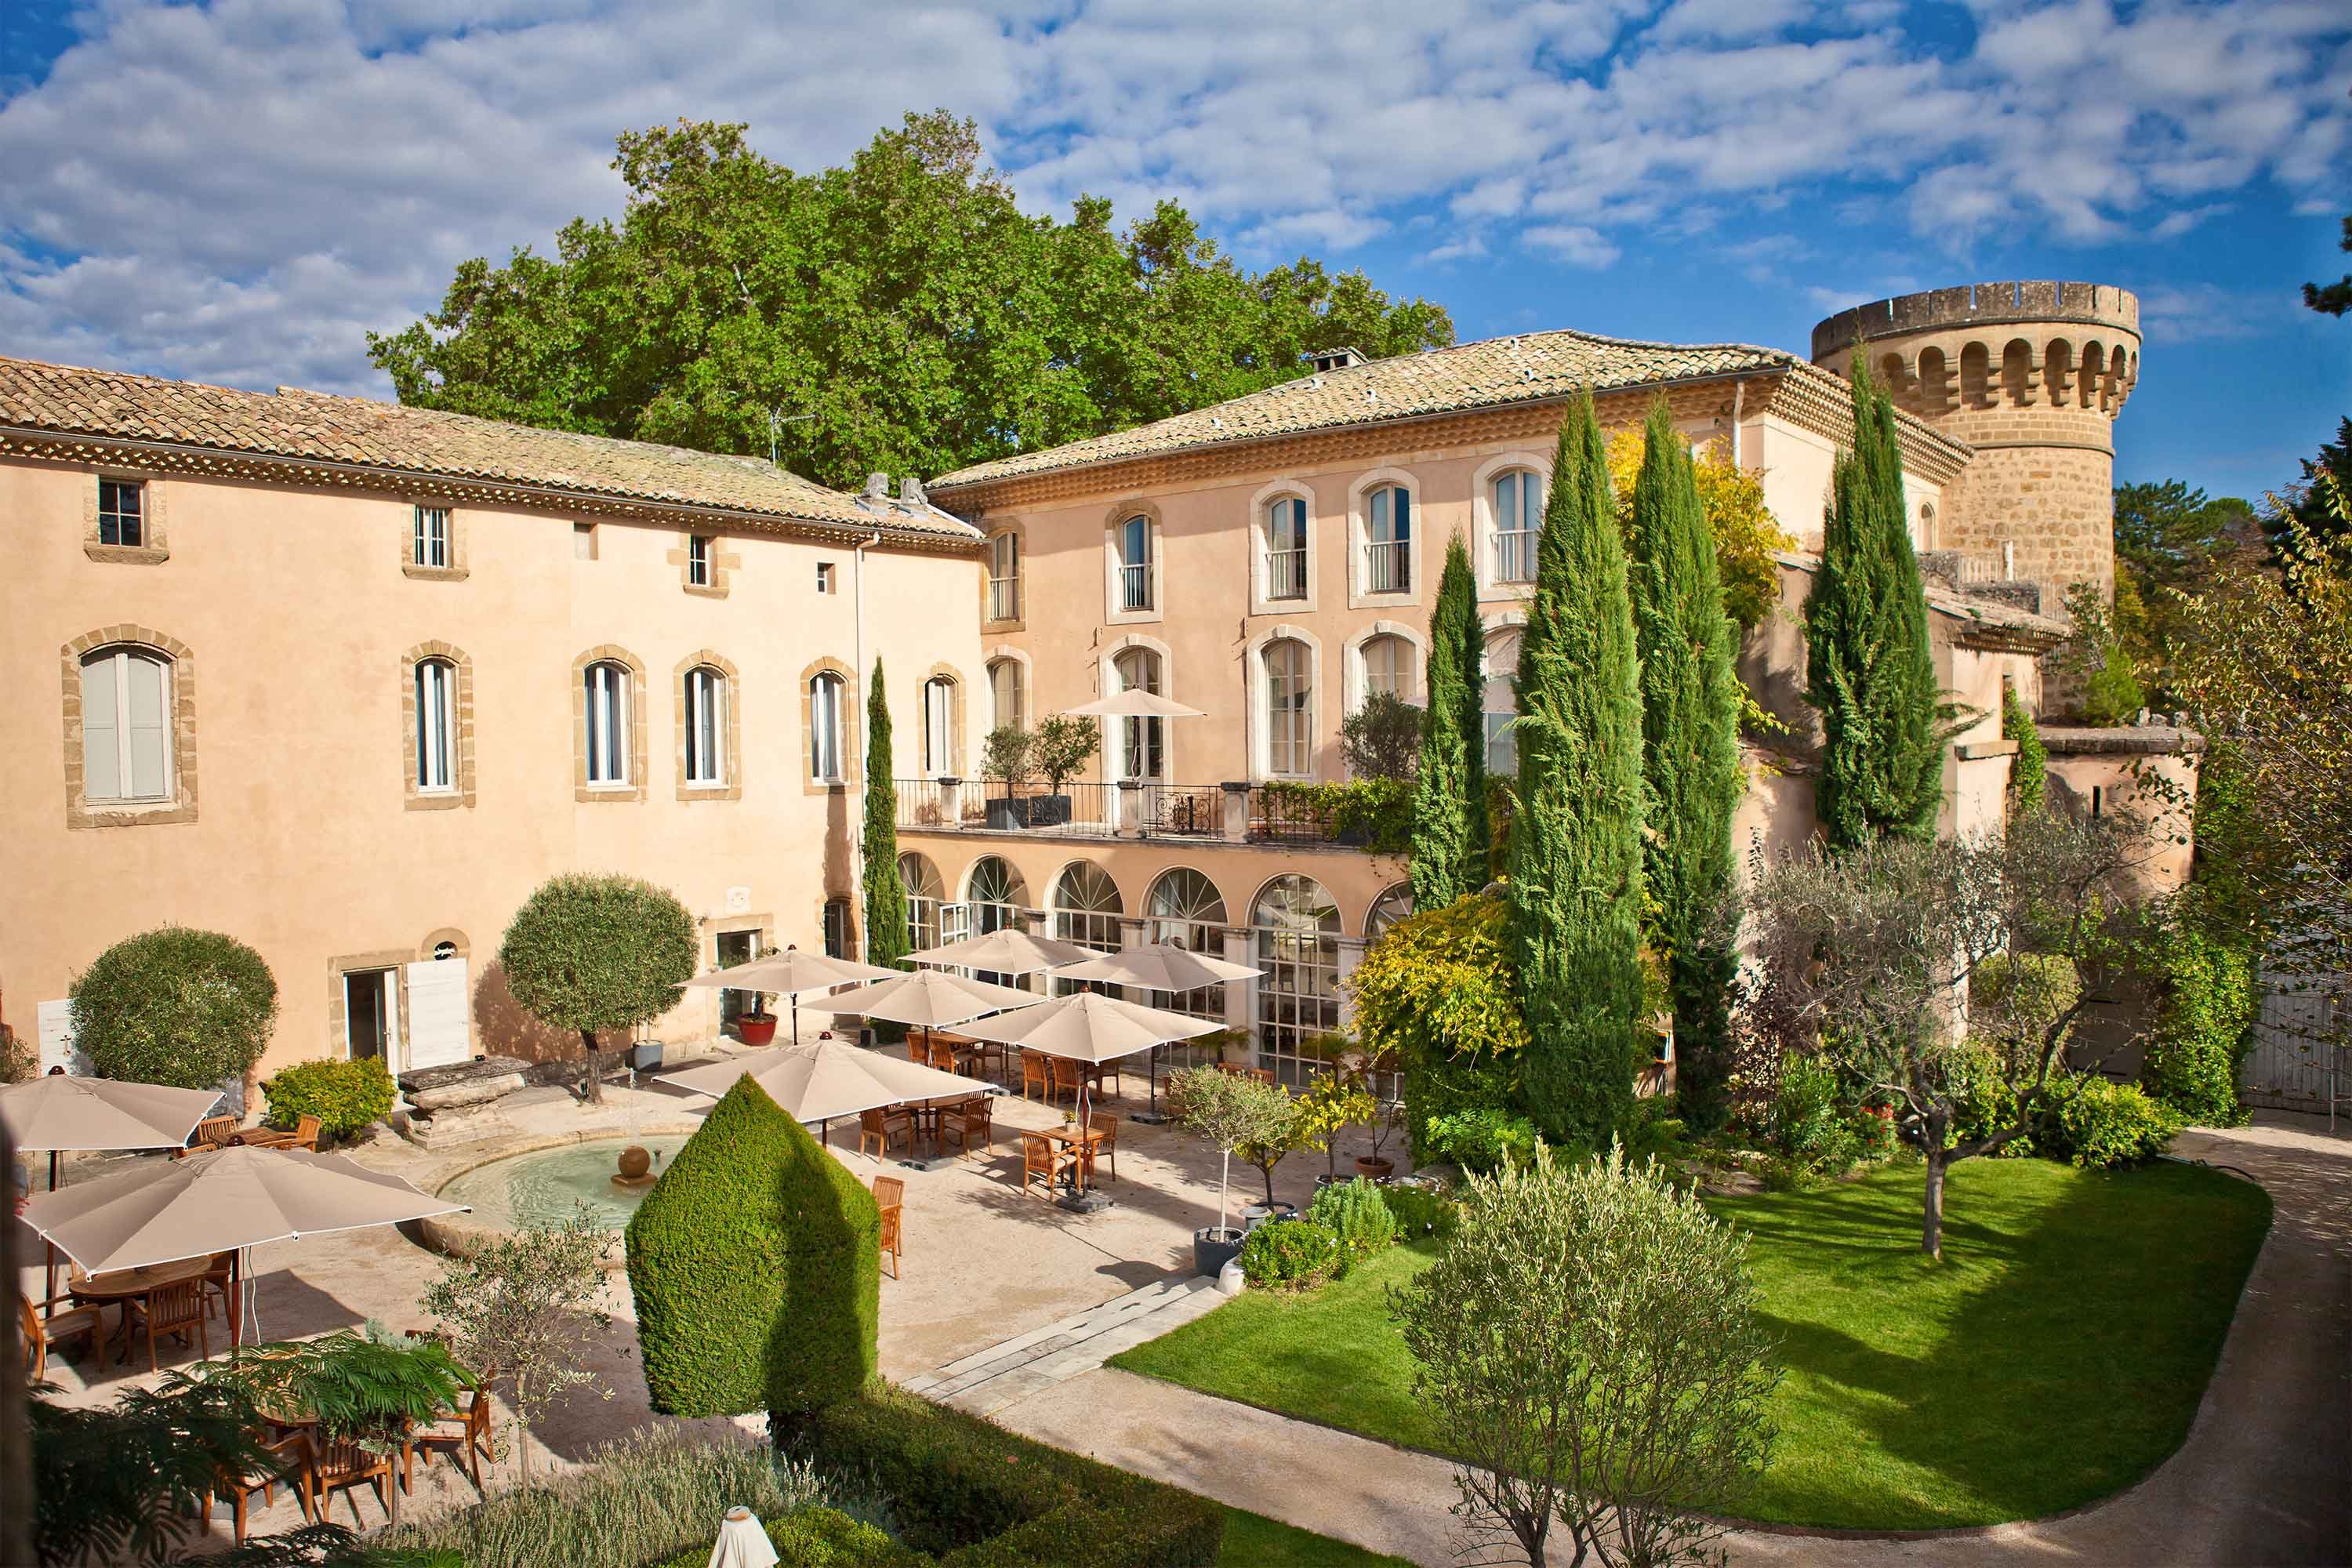 Luxury hotel in Provence, France - Château de Massillan 5* - Chef Mickael Furnion - Michelin-starred restaurant Le M- exterior